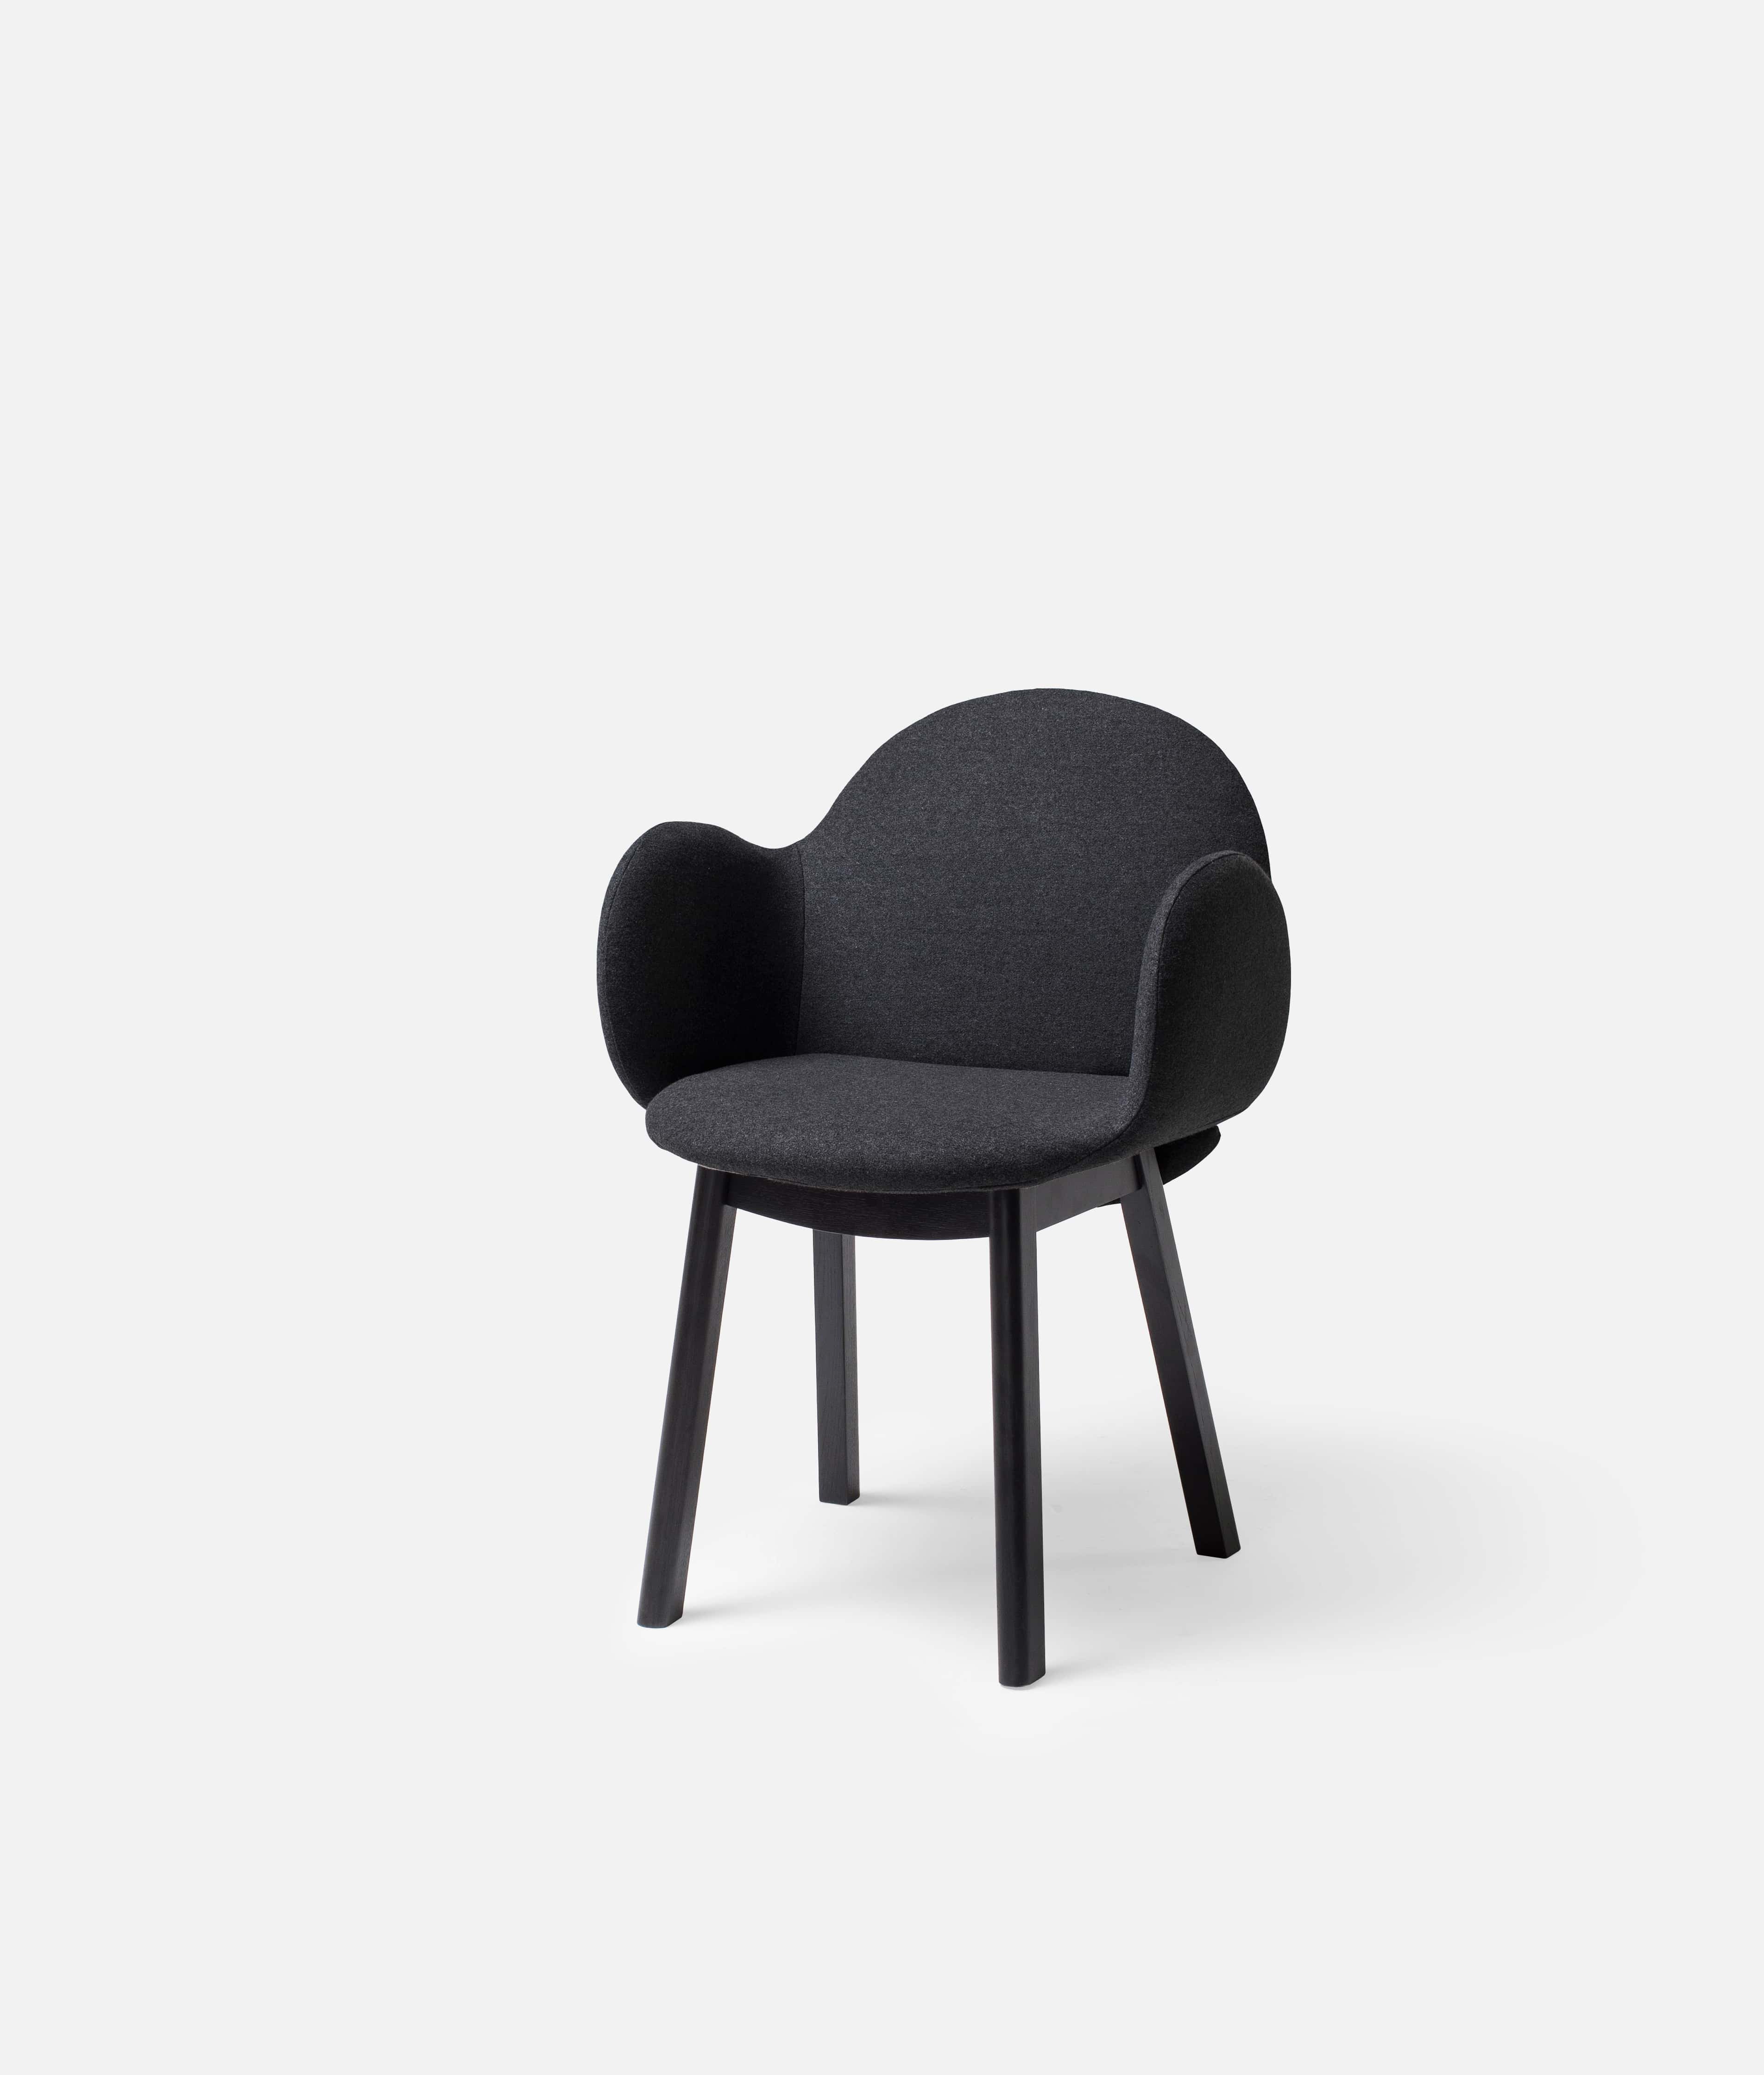 IMPROVISE CHAIR Chair ziinlife Black